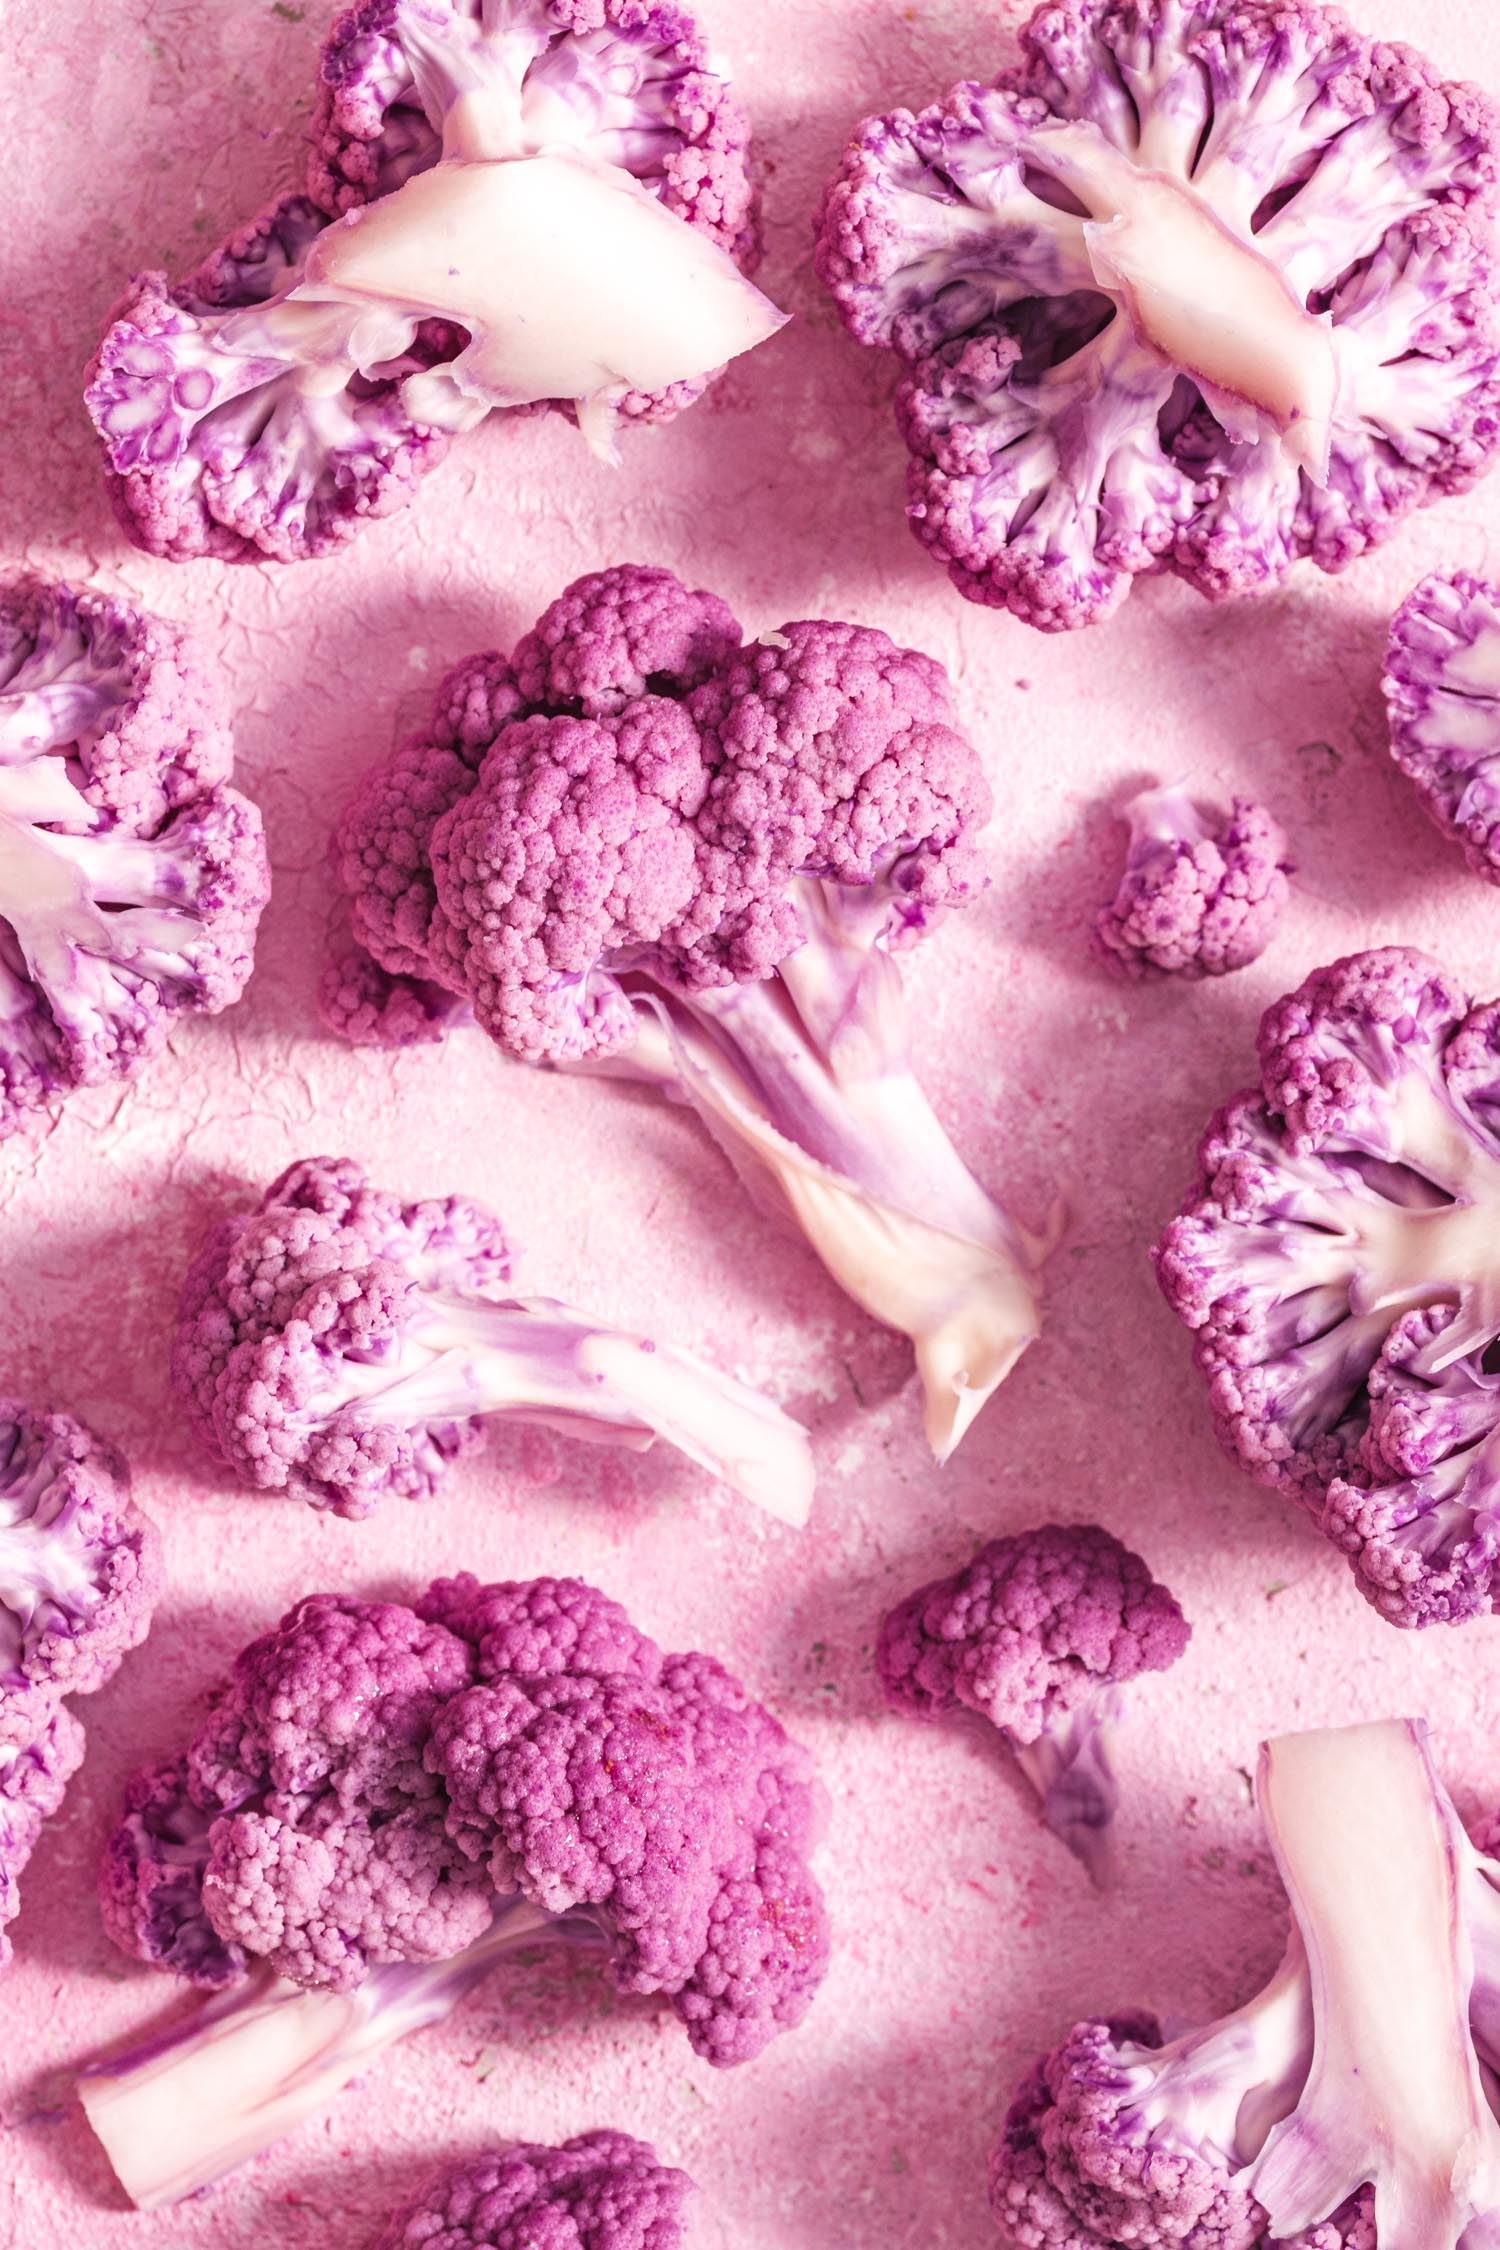 Purple cauliflower on a pink backdrop